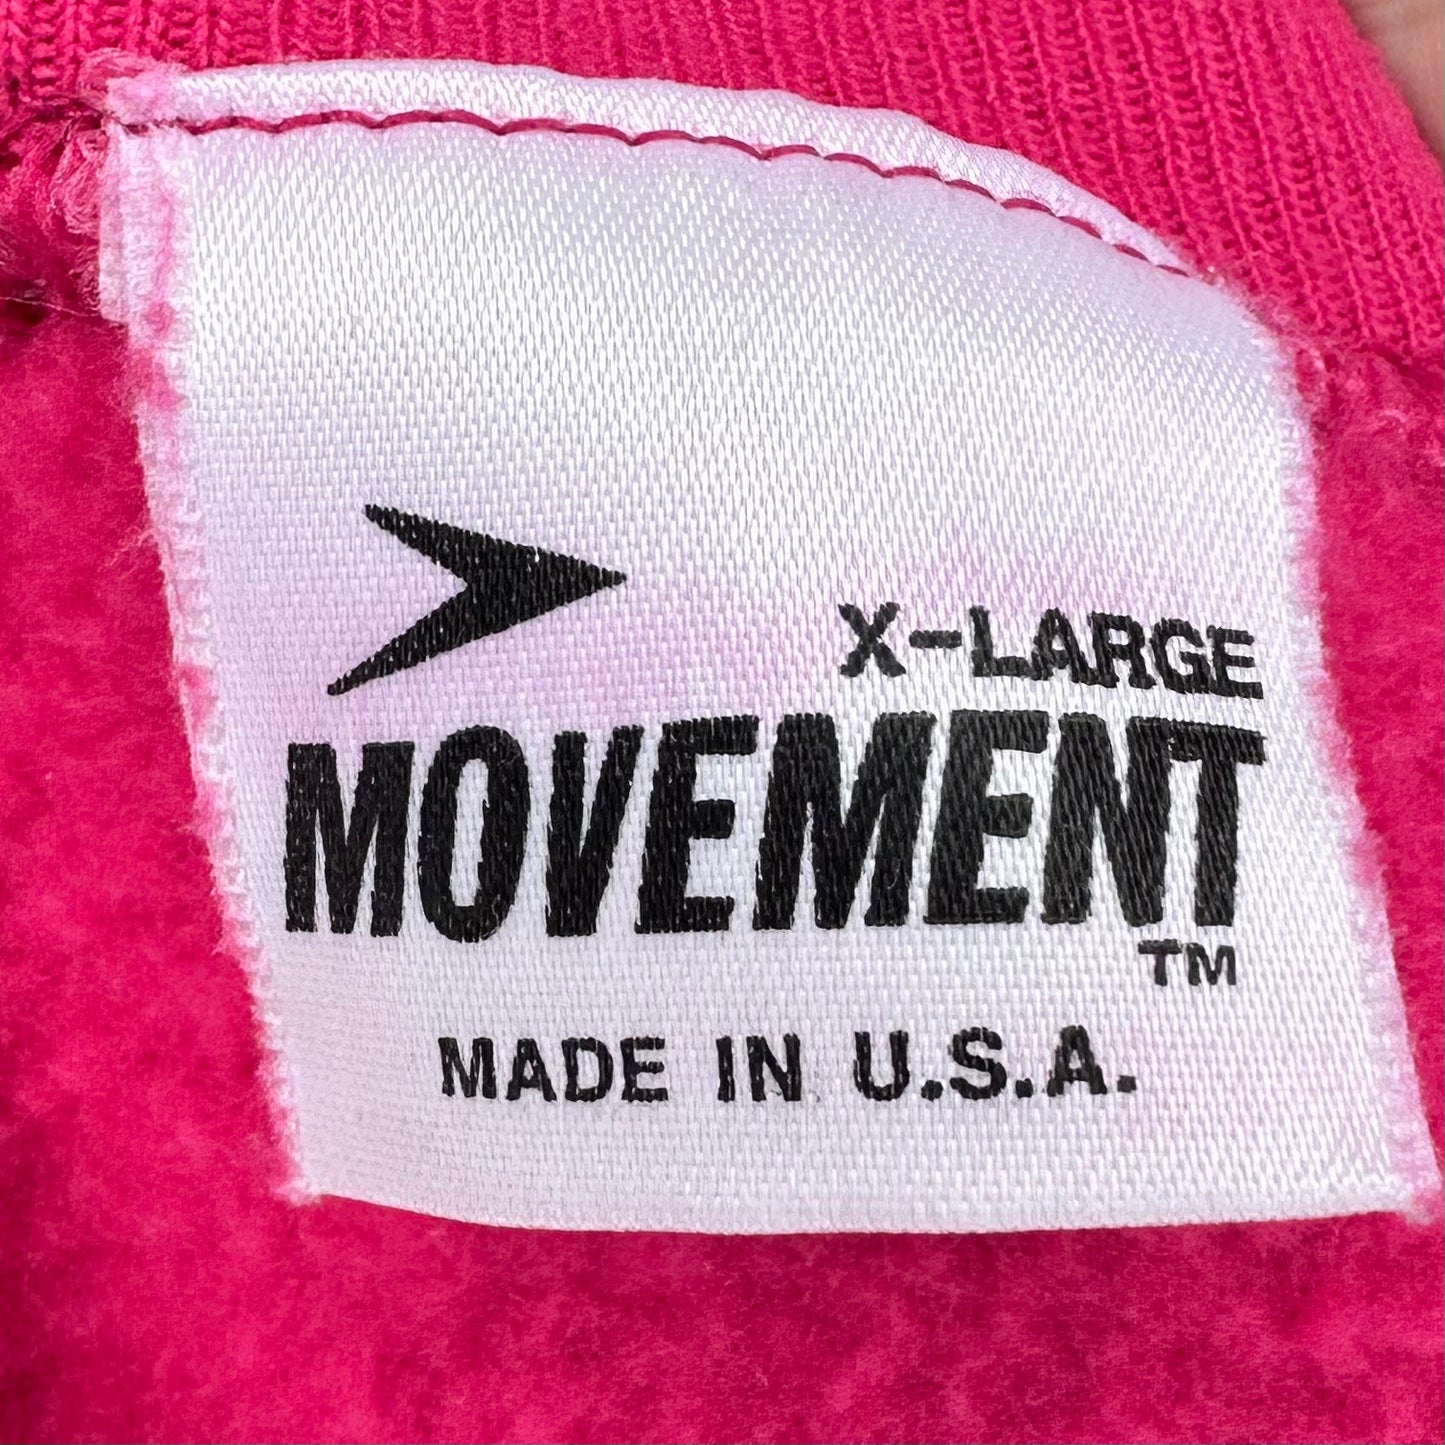 1980s/90s Pink Reindeer Sweatshirt, Glitter Print, Movement Size L/XL